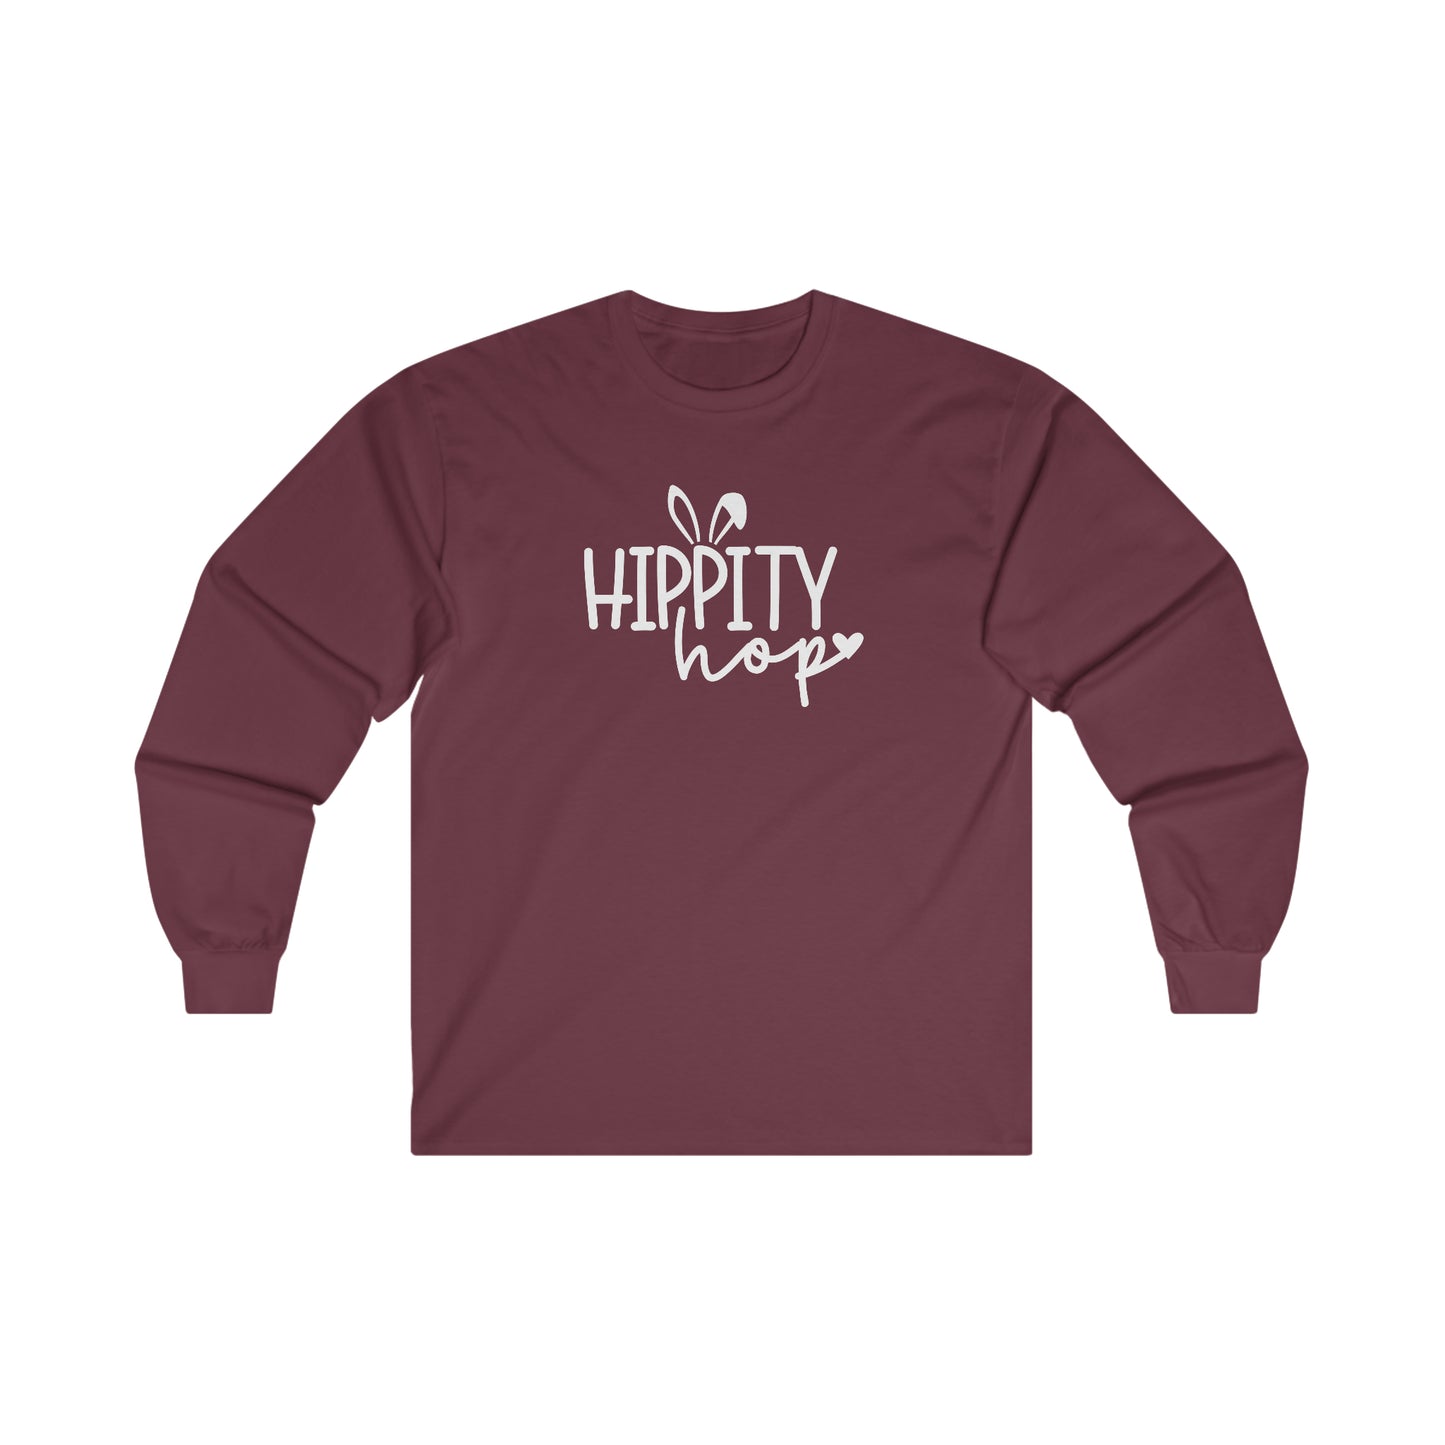 Hippity Hop Long Sleeve Shirt